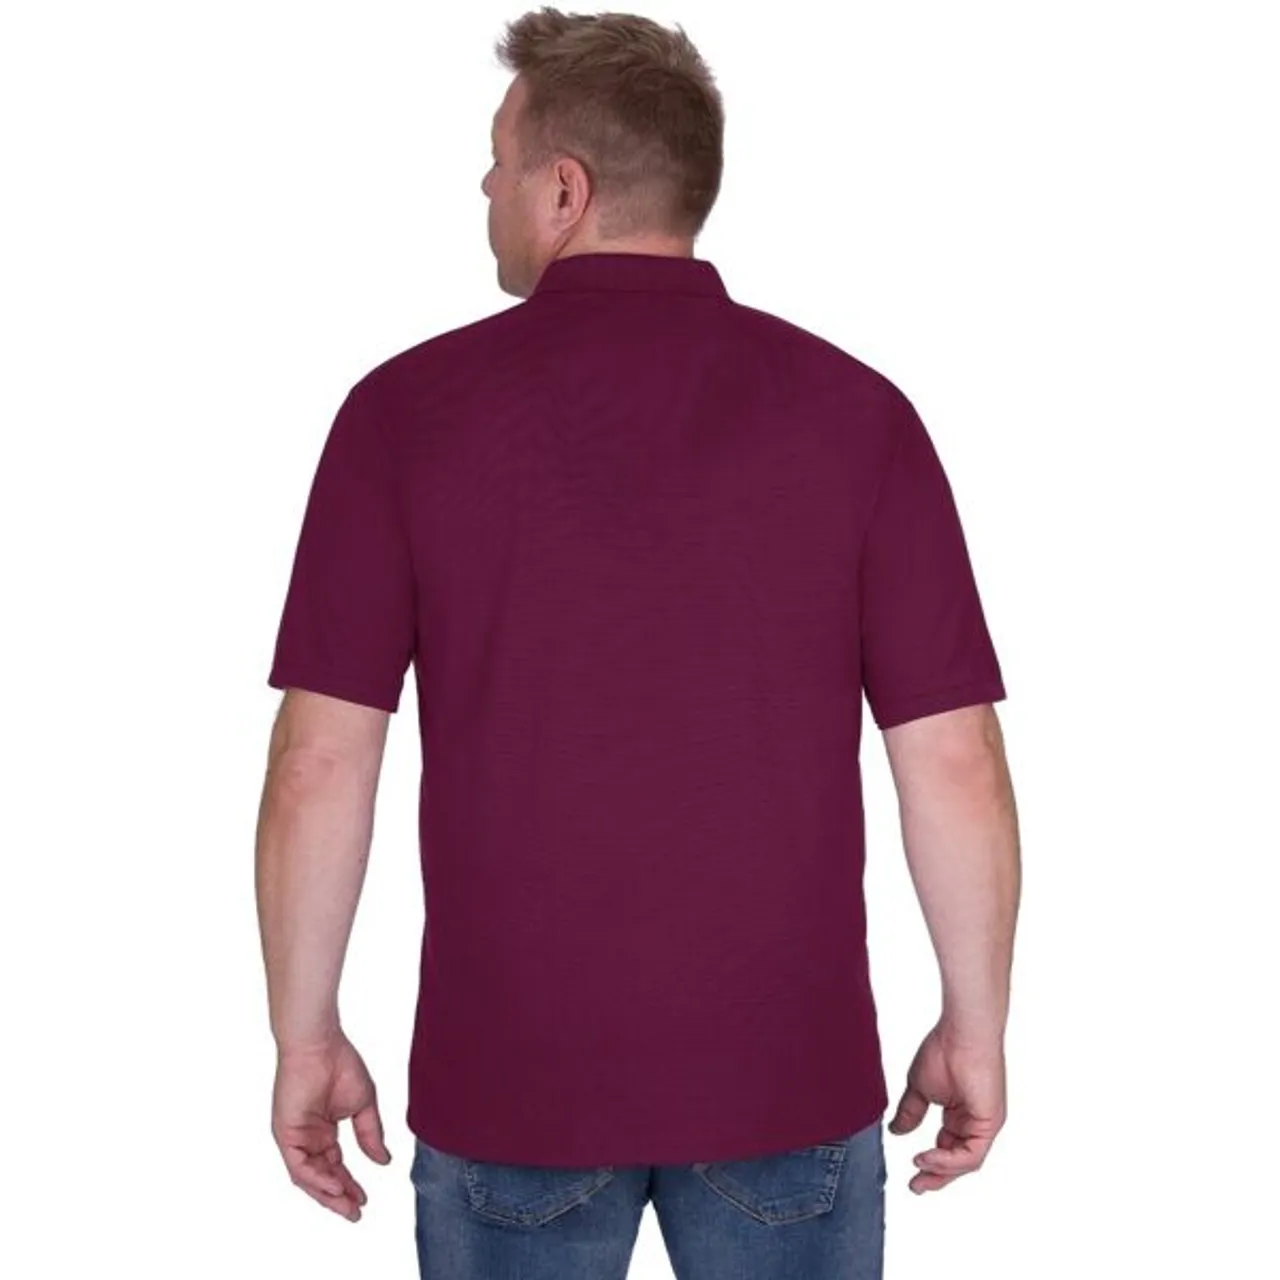 Poloshirt TRIGEMA "TRIGEMA Polohemd mit Brusttasche" Gr. M, rot (sangria) Herren Shirts Kurzarm